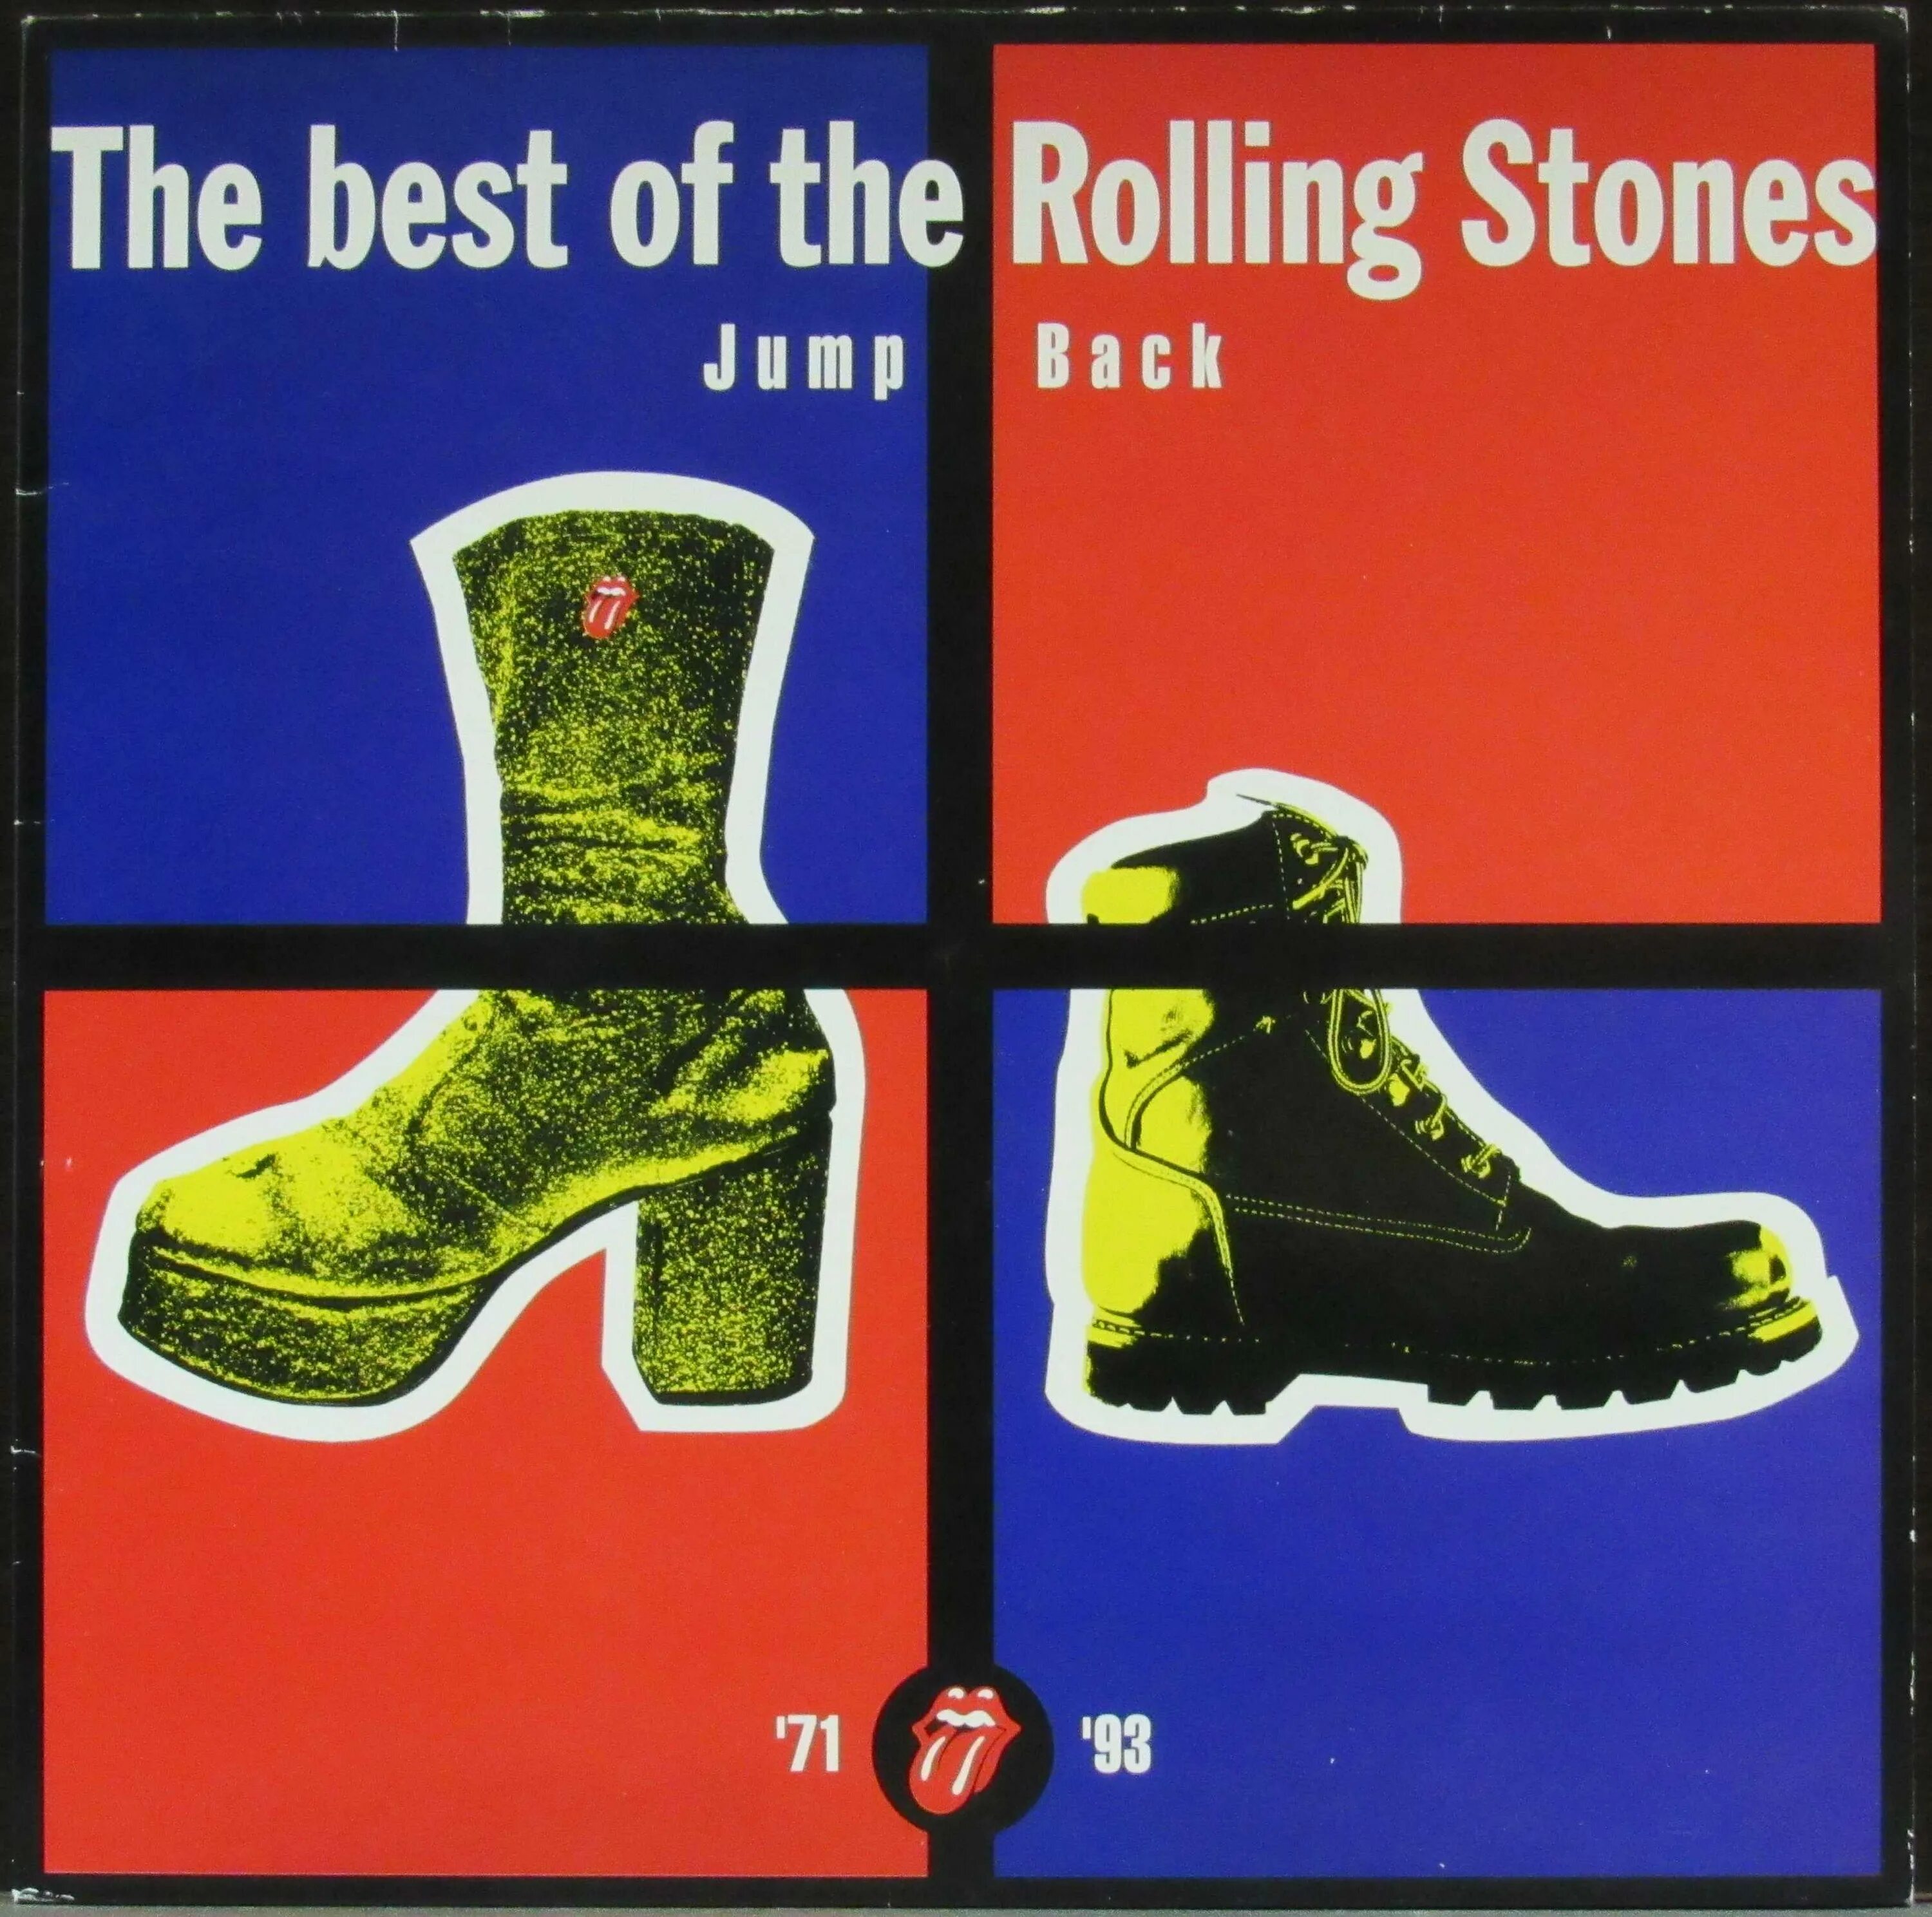 The Rolling Stones 1971-1993. The Rolling Stones the Jump back. The Rolling Stones - best of the best. Роллинг стоунз Джоджо. Jump back